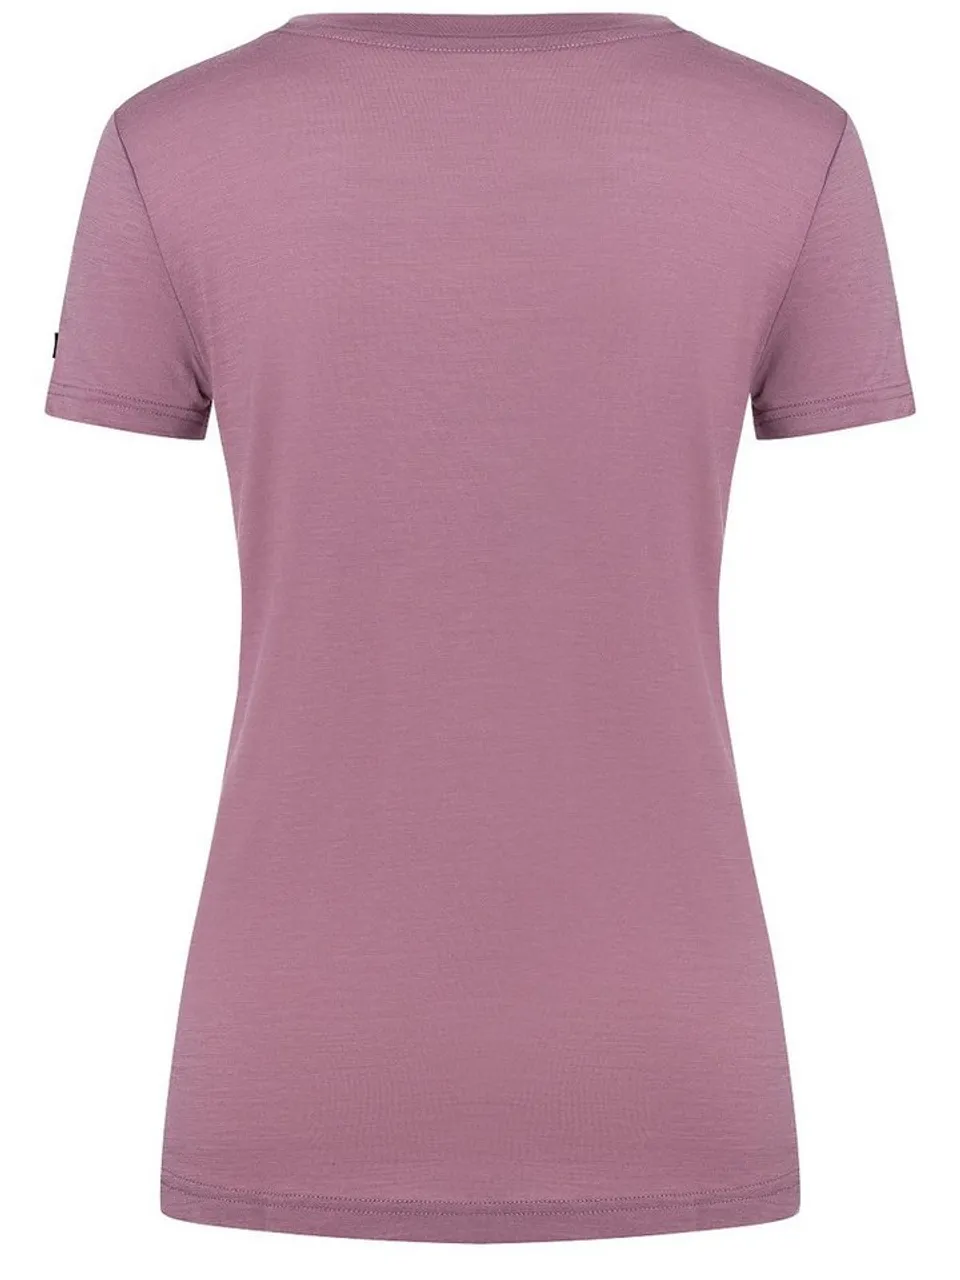 SUPER.NATURAL T-Shirt für Damen, Merino ARABESQUE Muster Print, casual